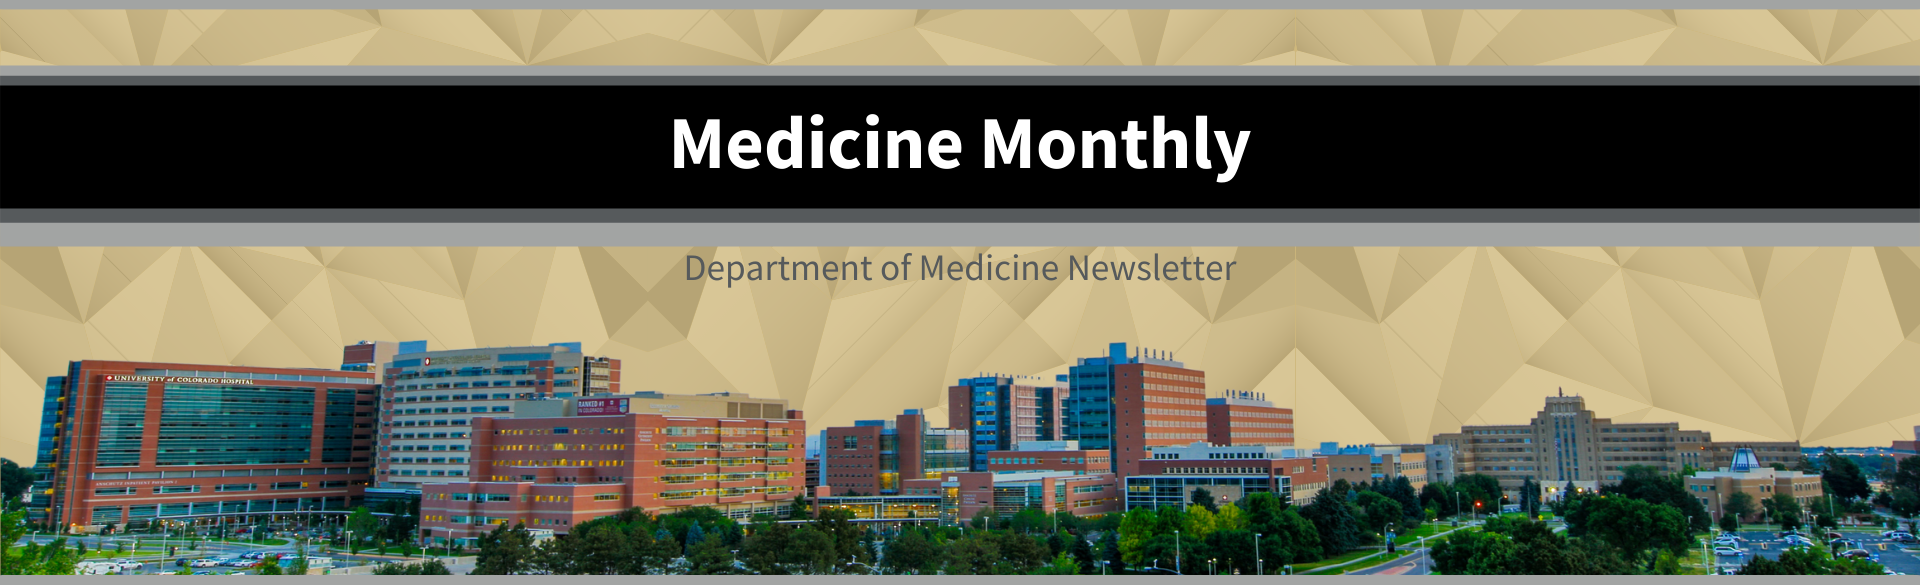 Medicine Monthly – Department of Medicine Newsletter